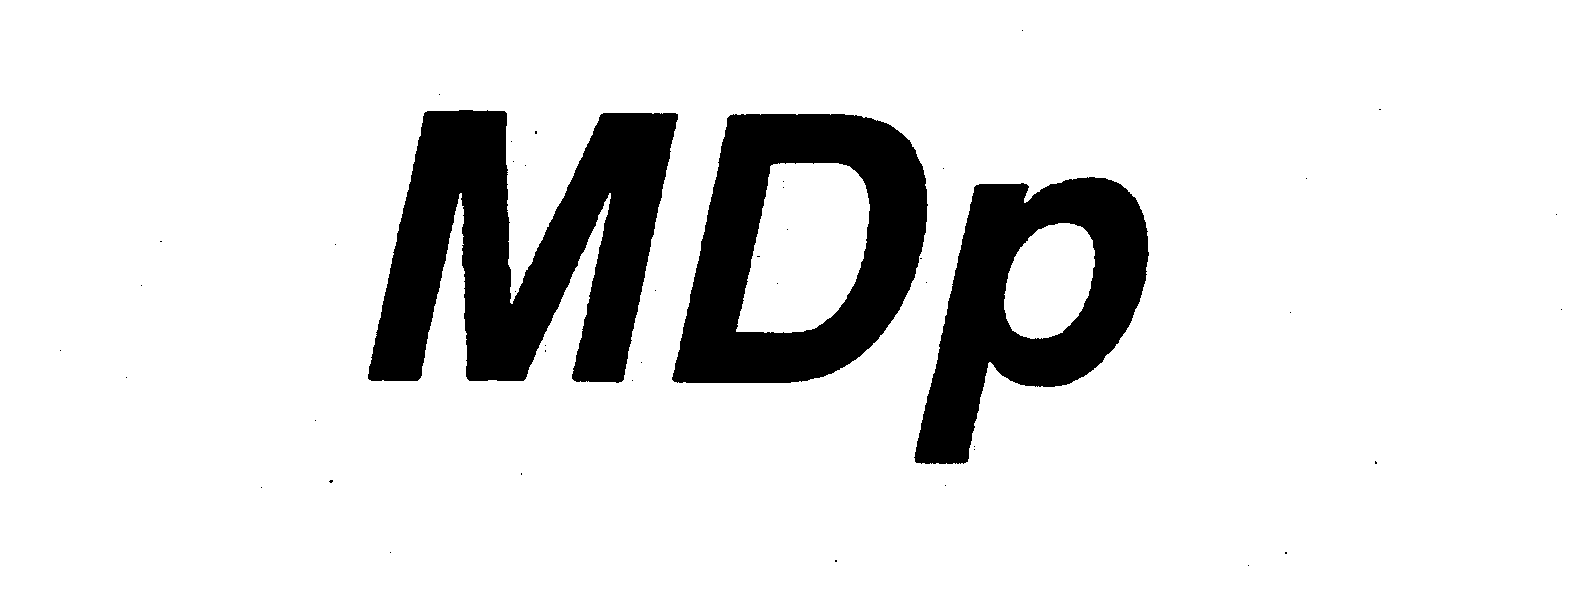 Trademark Logo MDP